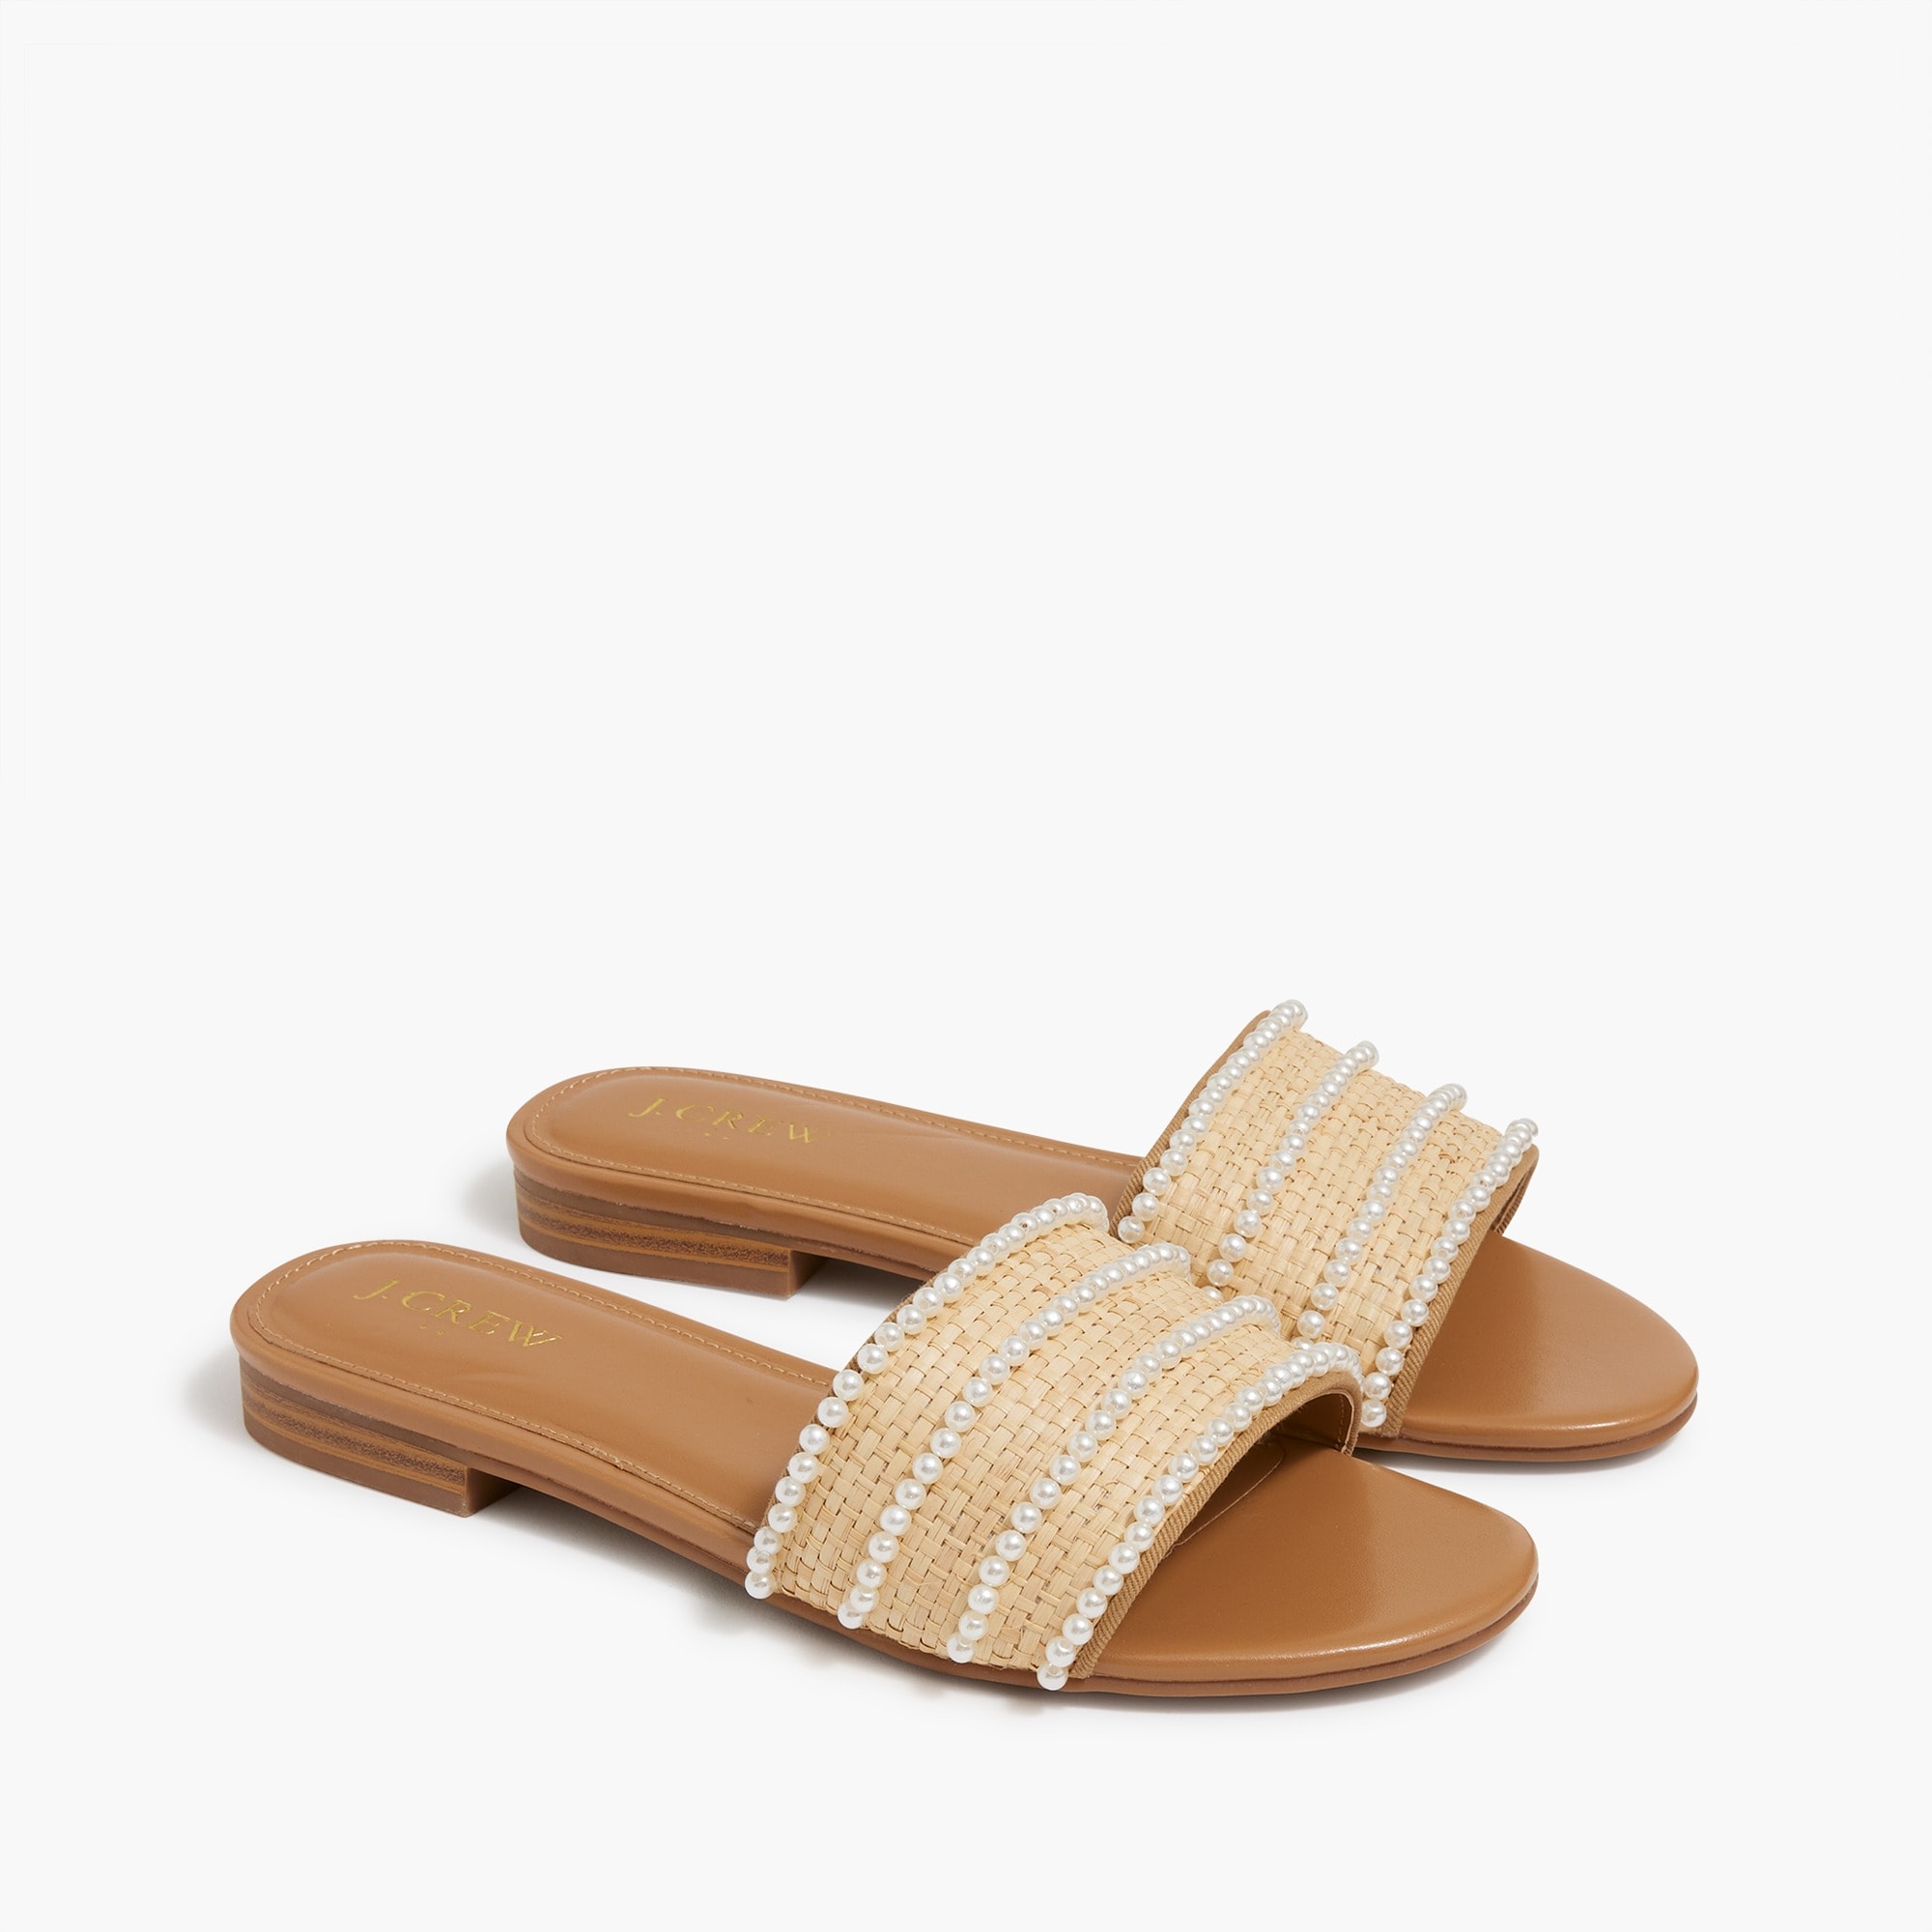  Raffia slide sandals